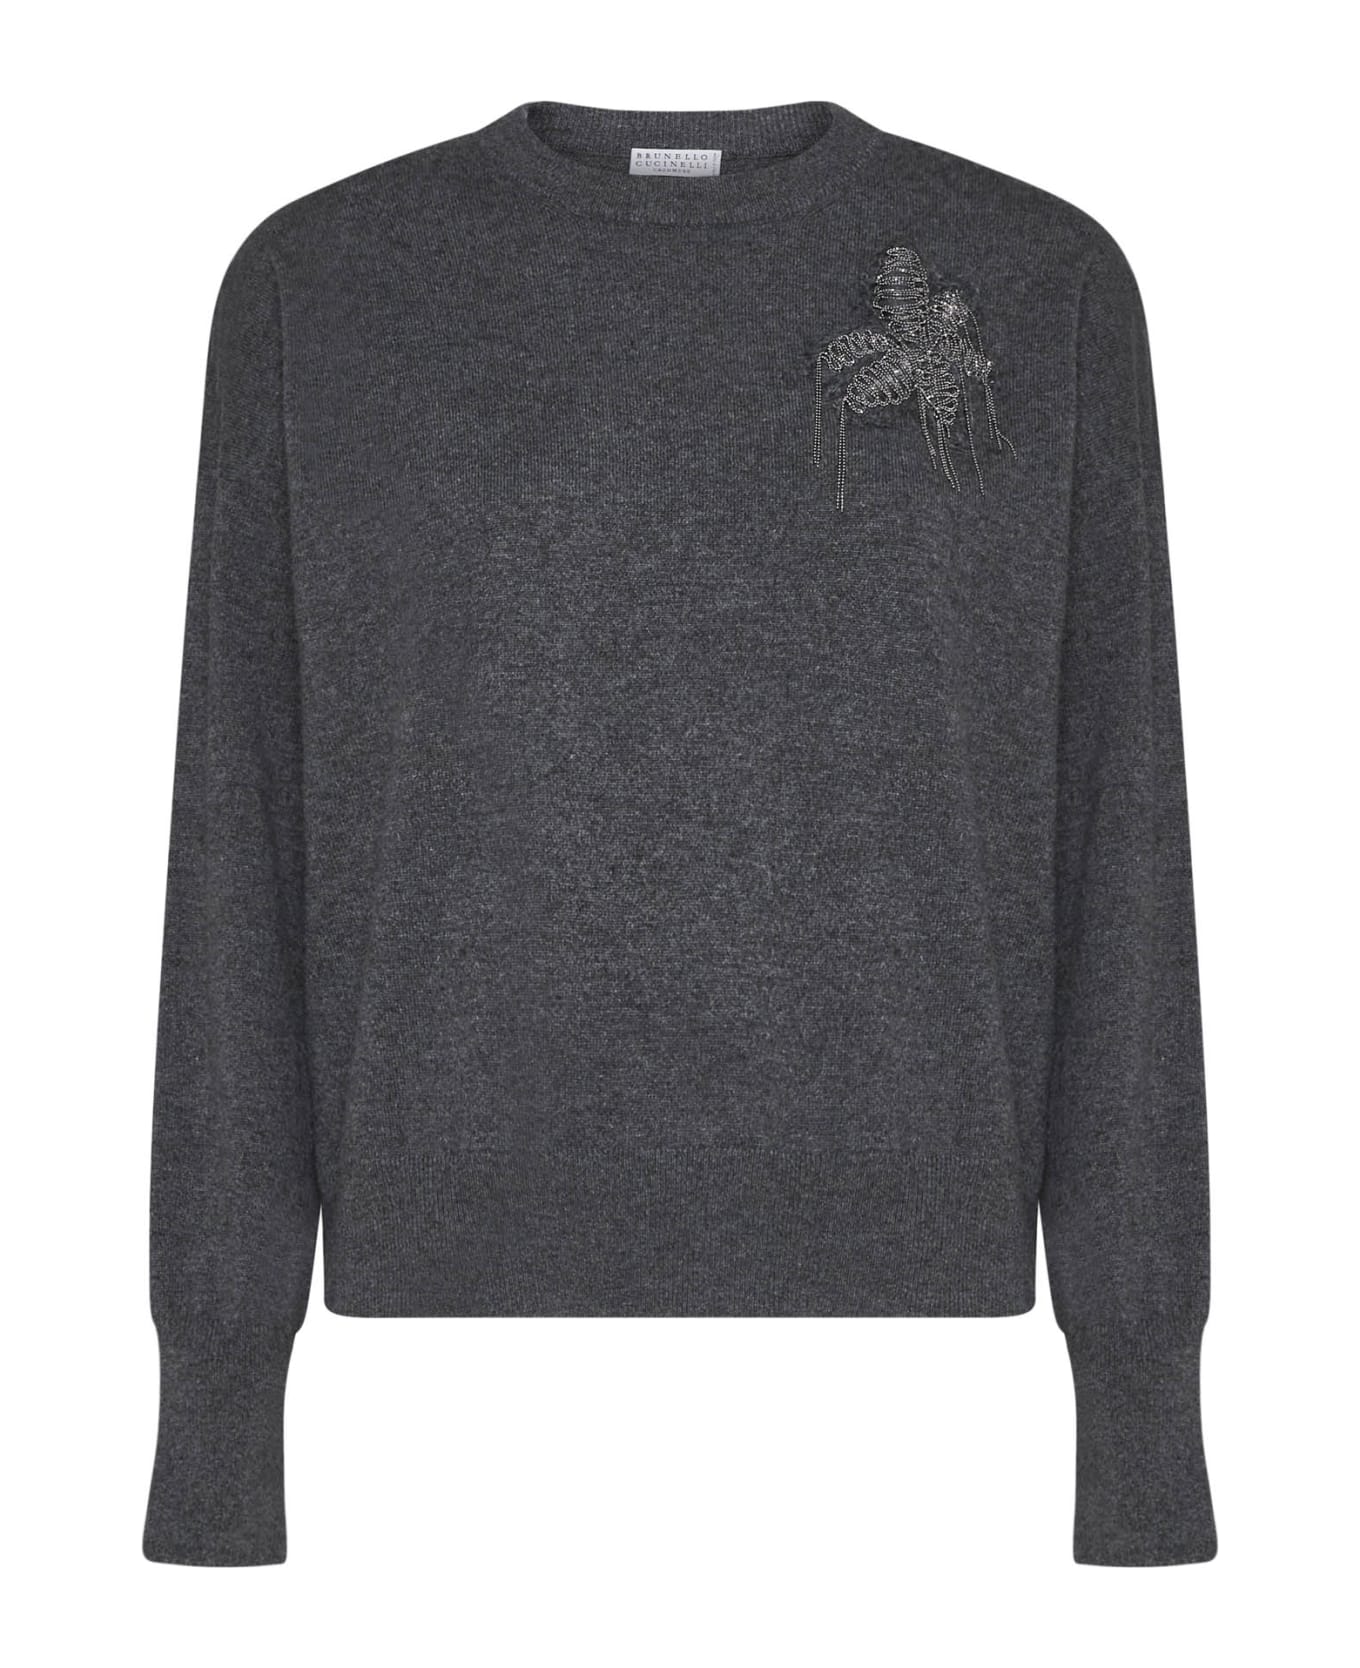 Brunello Cucinelli Sweater - Grey